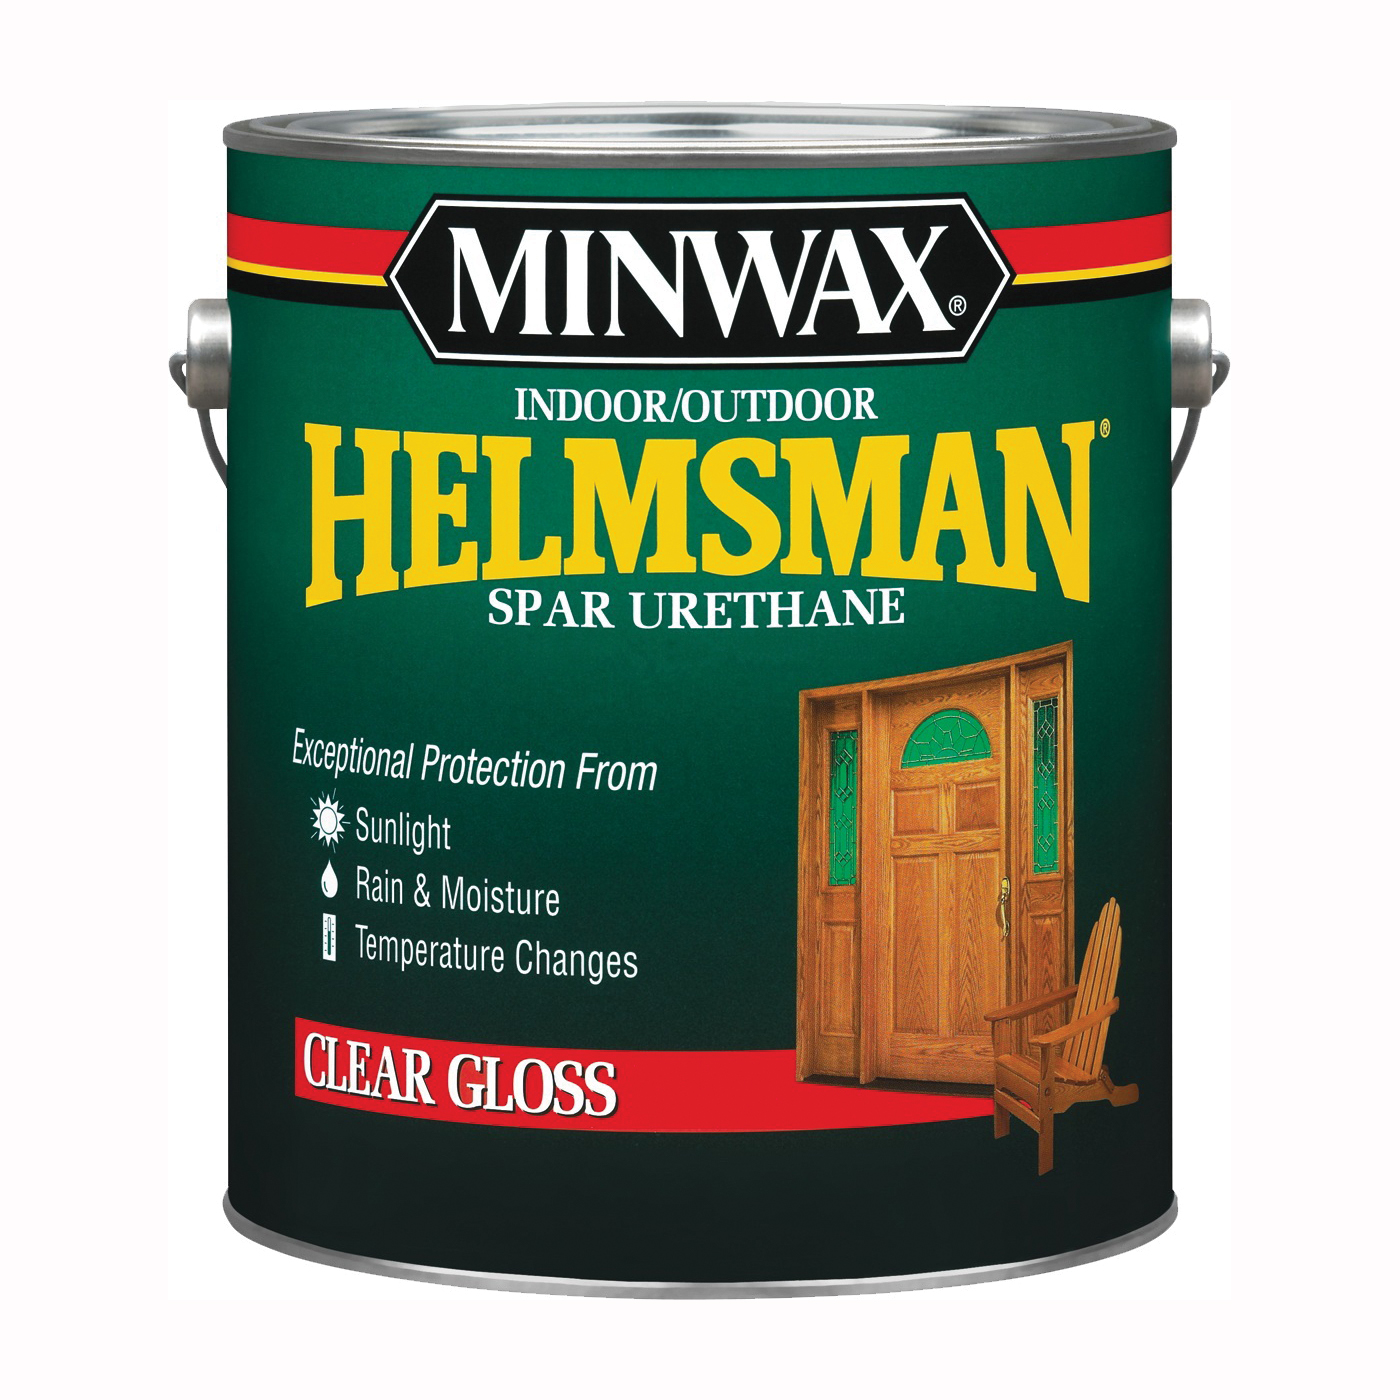 Helmsman 13200000 Spar Urethane Paint, High-Gloss, Liquid, 1 gal, Pail